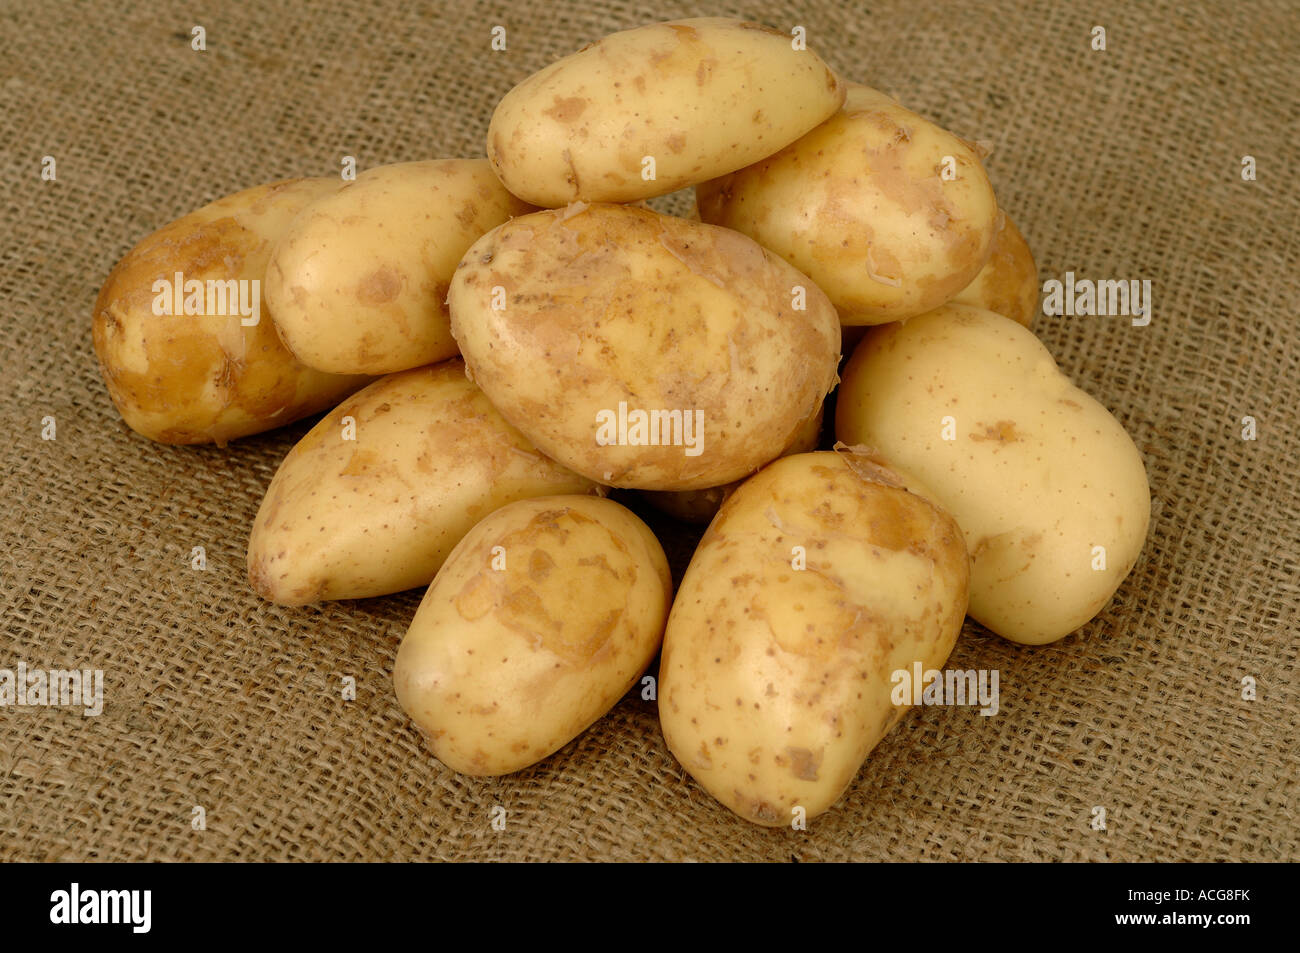 Buy Jersey Royal Potatoes Shop, 58% OFF | www.colegiogamarra.com